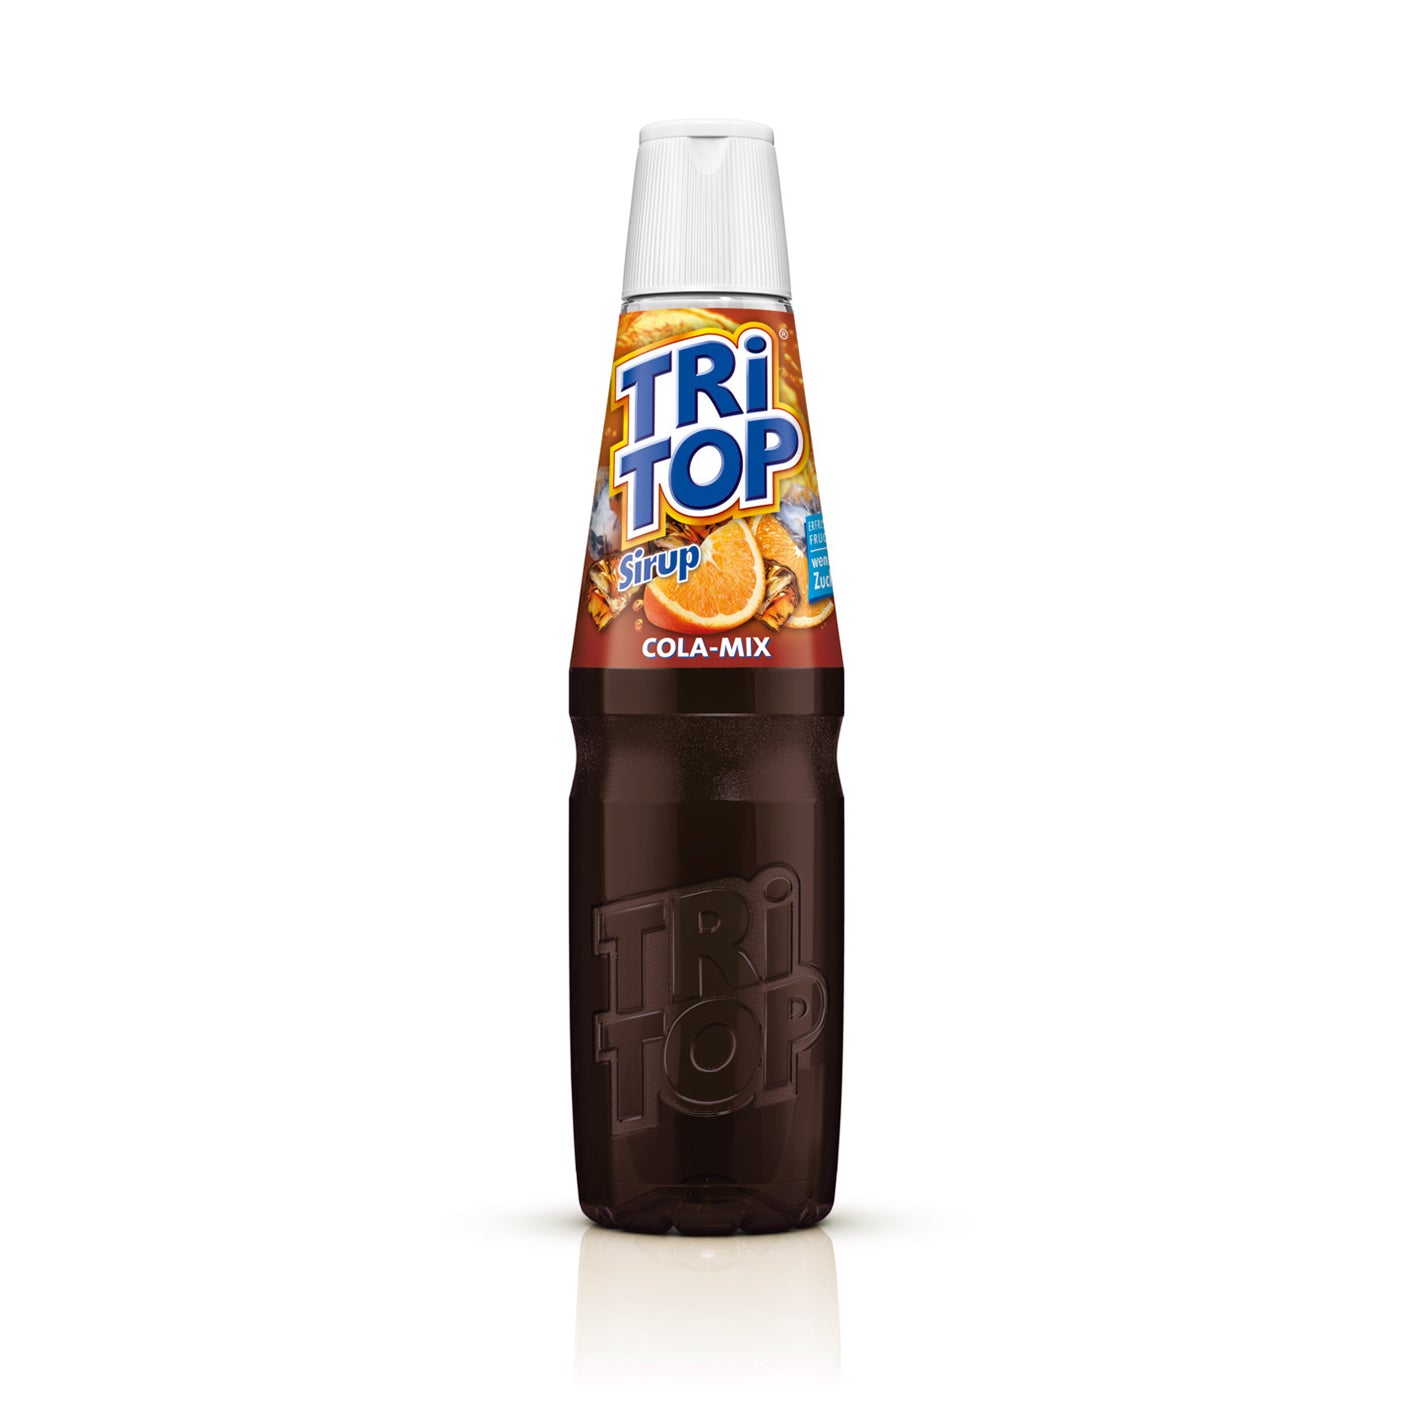 TRi TOP Sirup Orange-Cola Mix - 600 ml